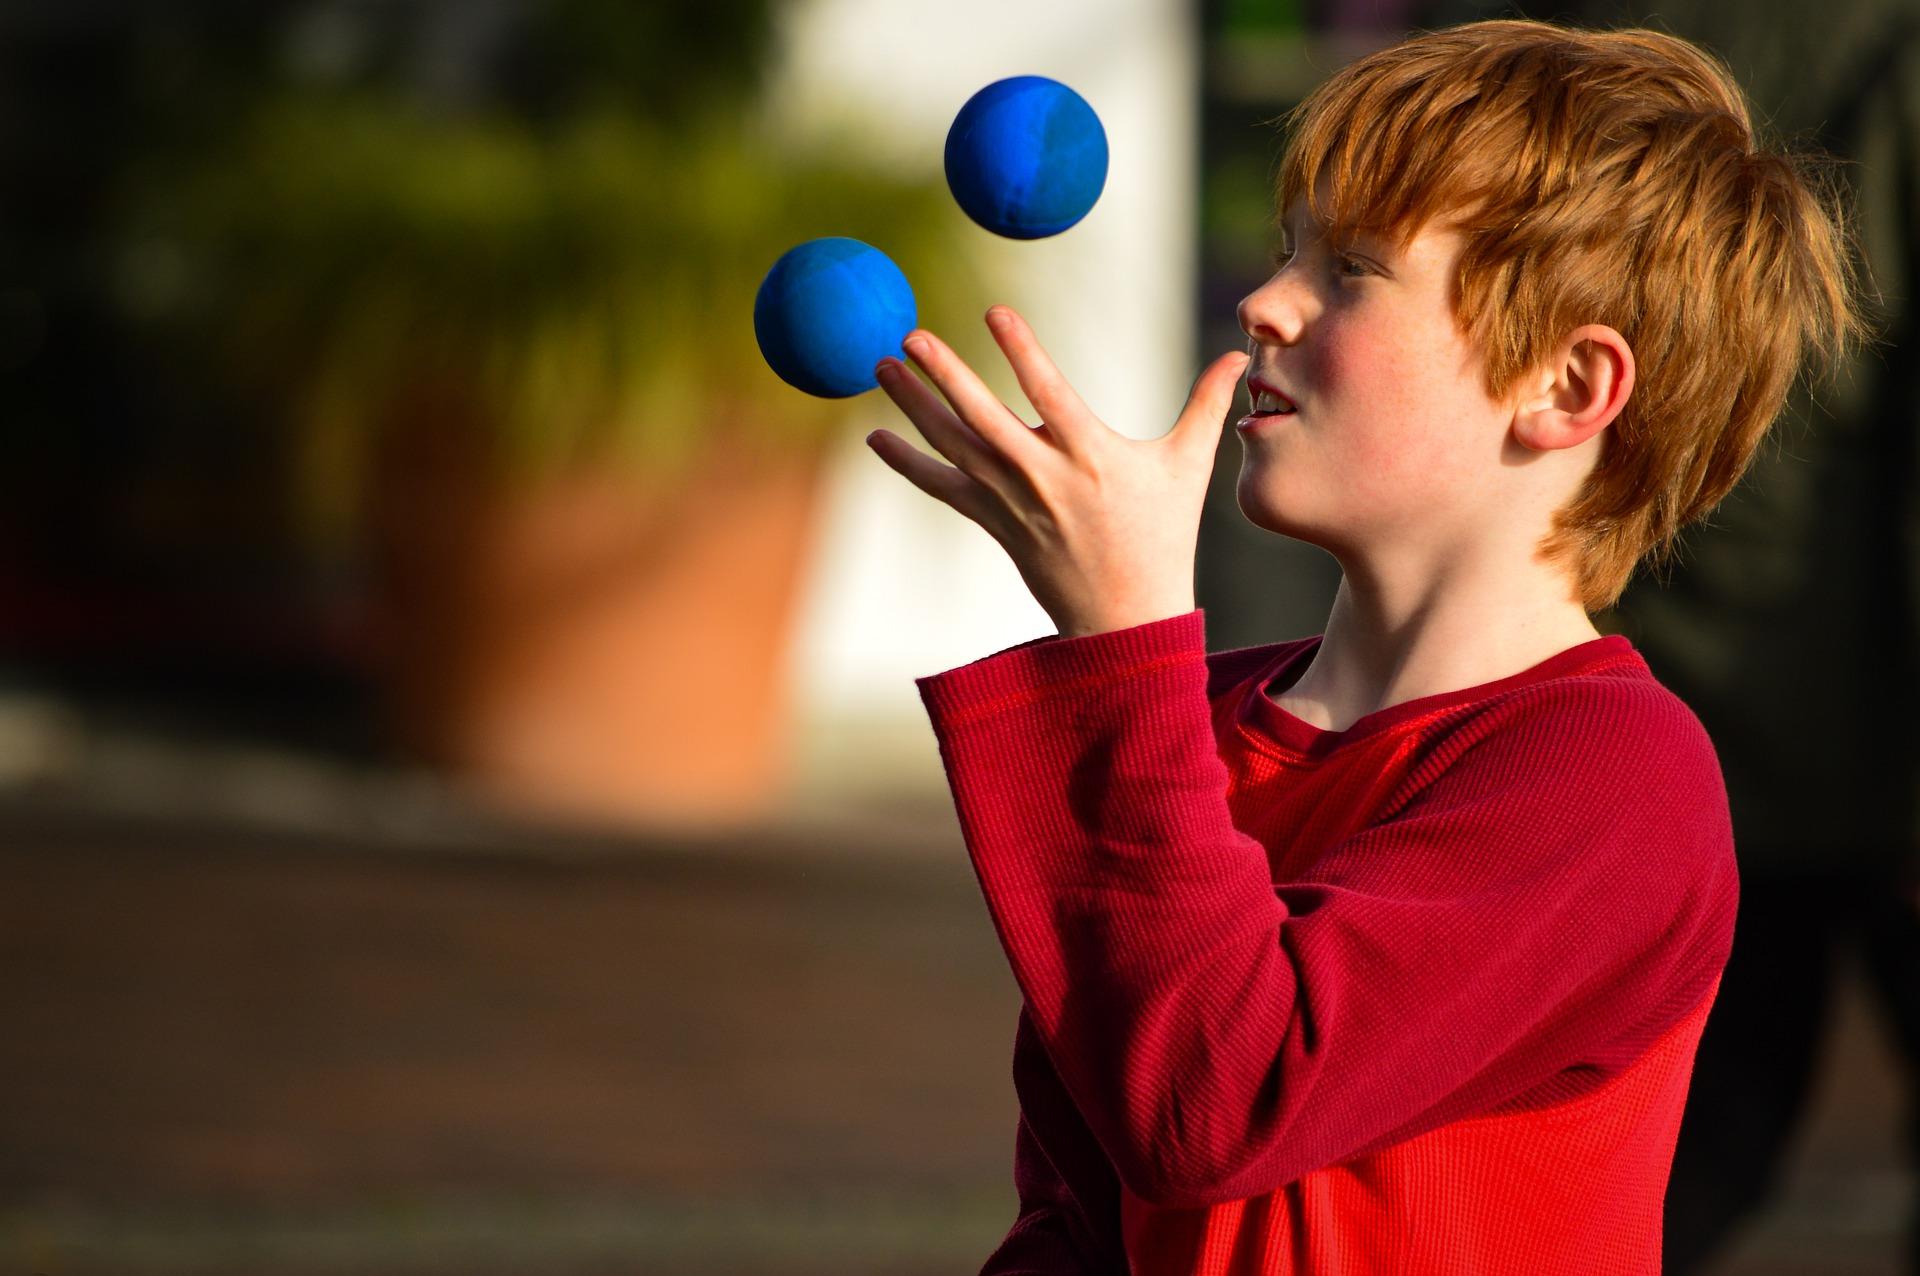 A red headed boy juggling balls